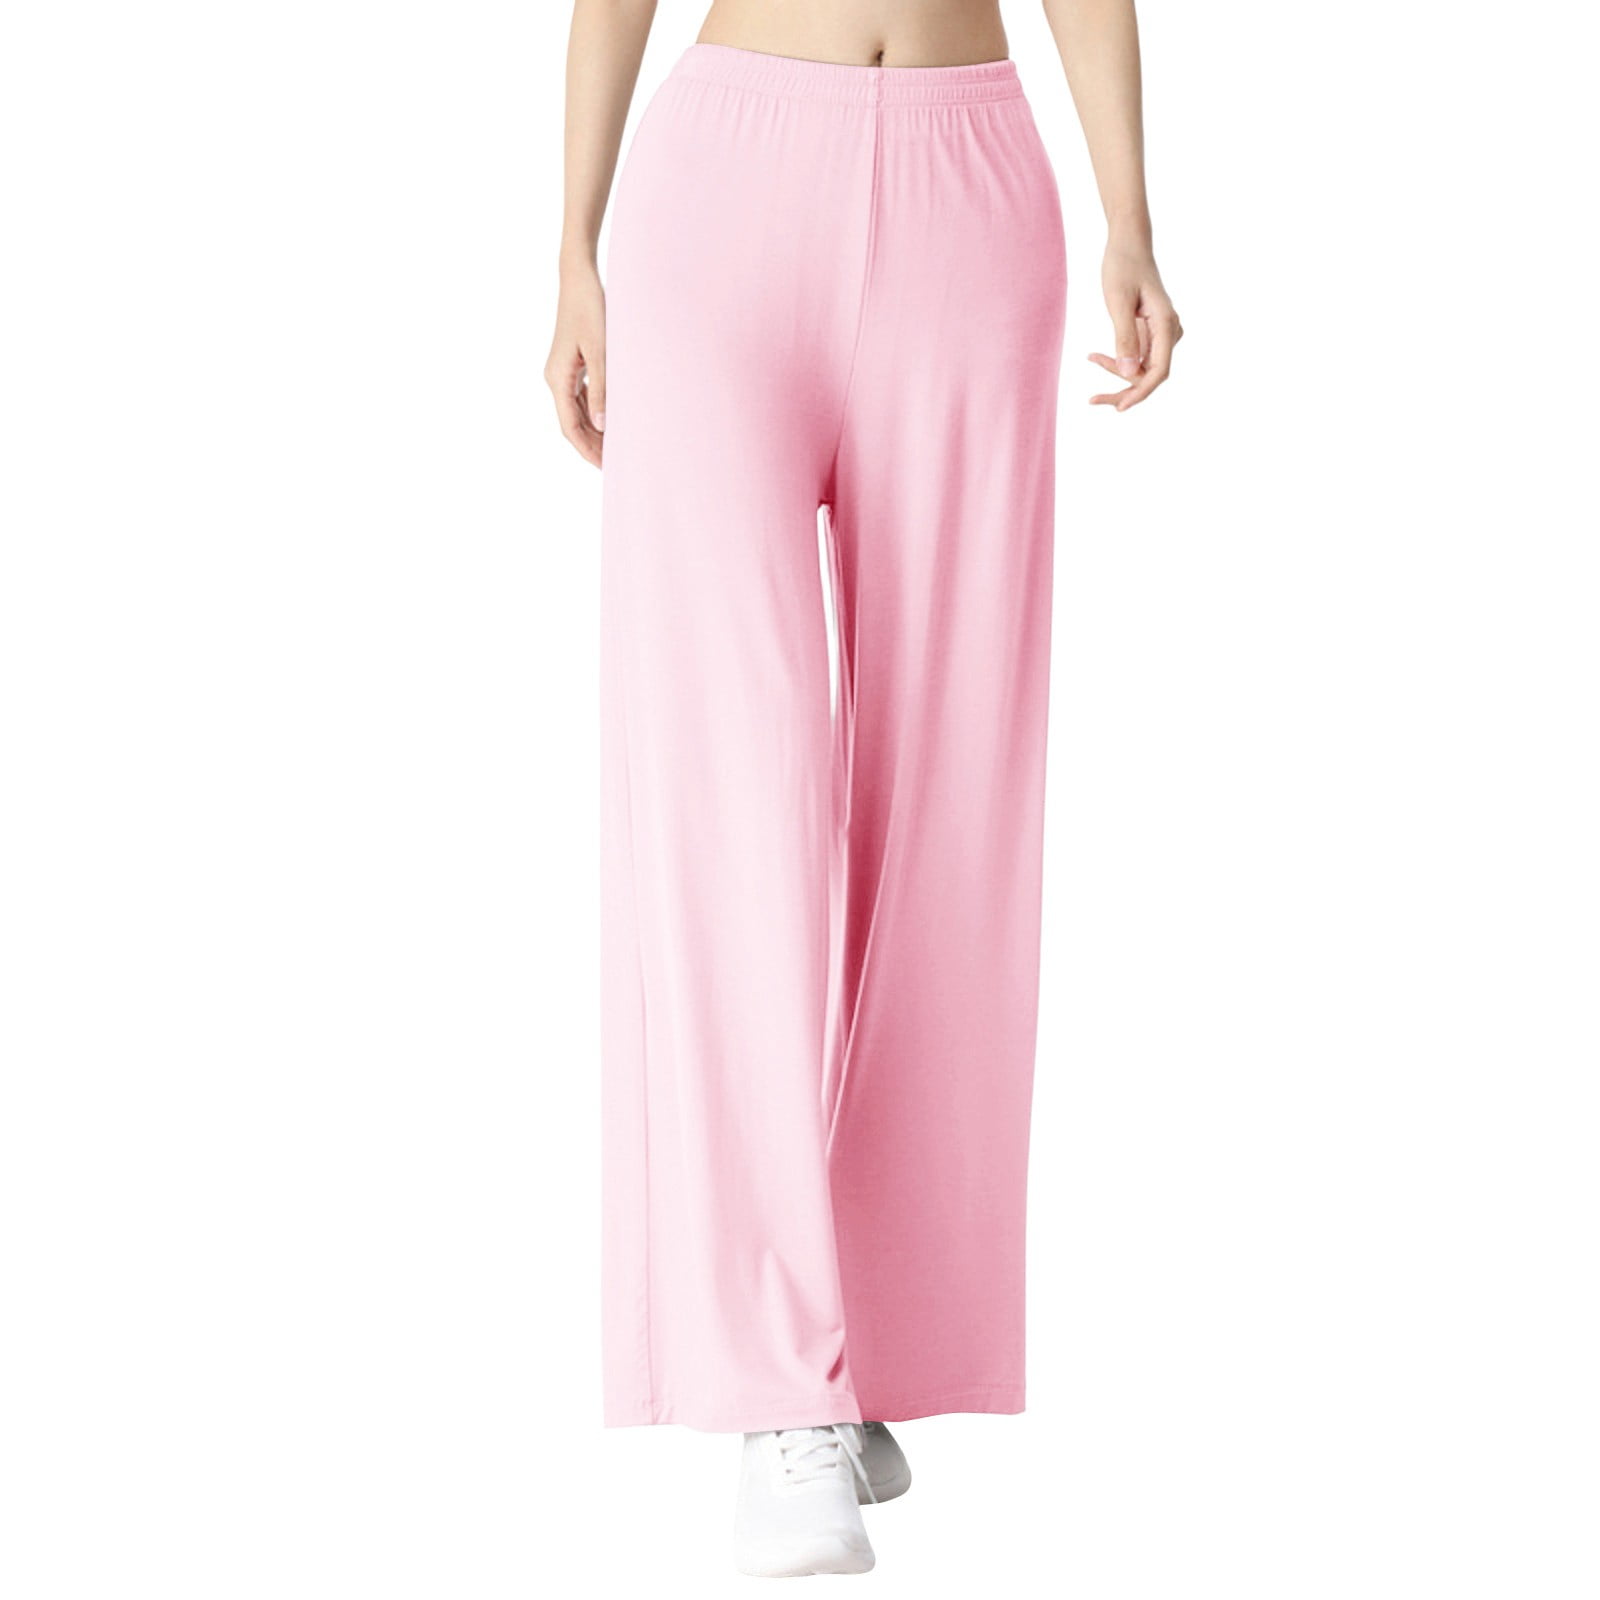 adviicd Yoga Pants For Women Casual Summer Yoga pants For Women